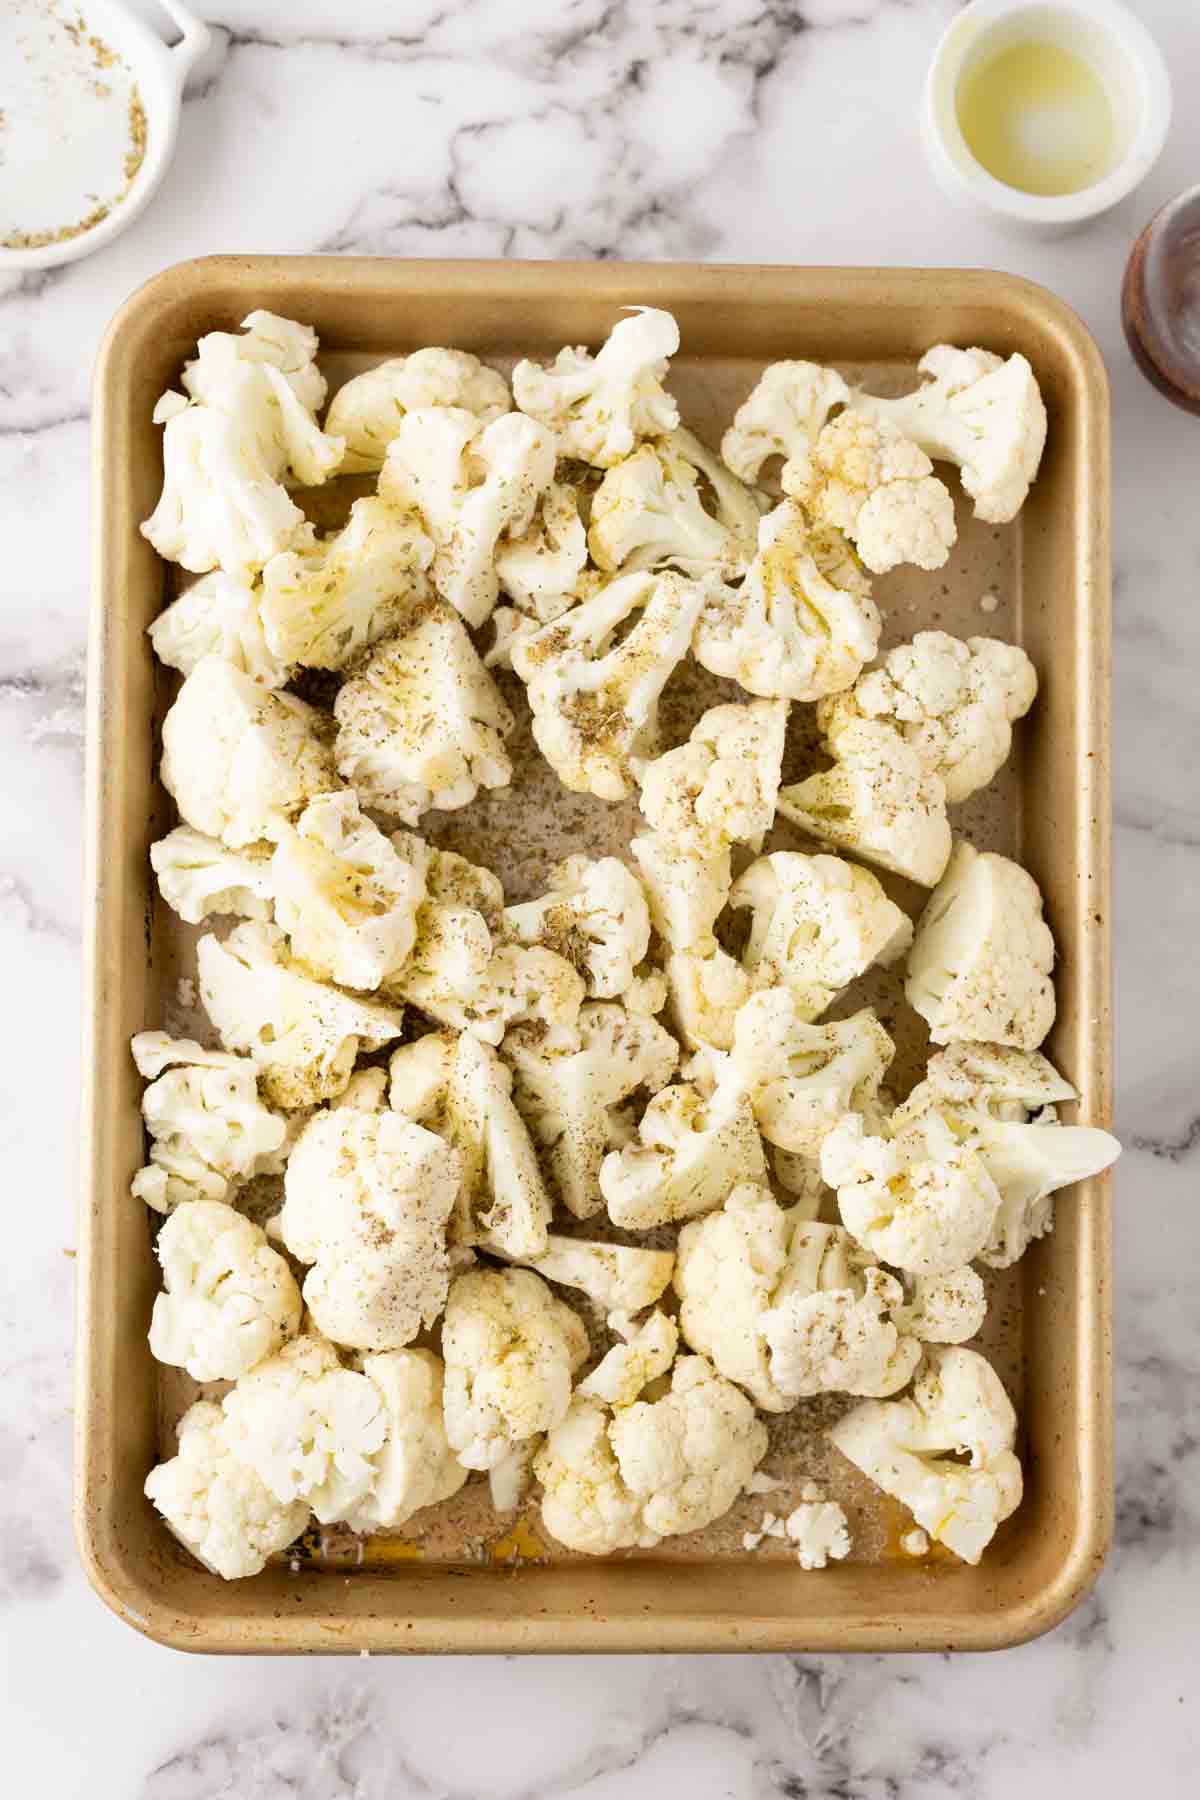 raw white cauliflower florets seasoned on a baking dish.